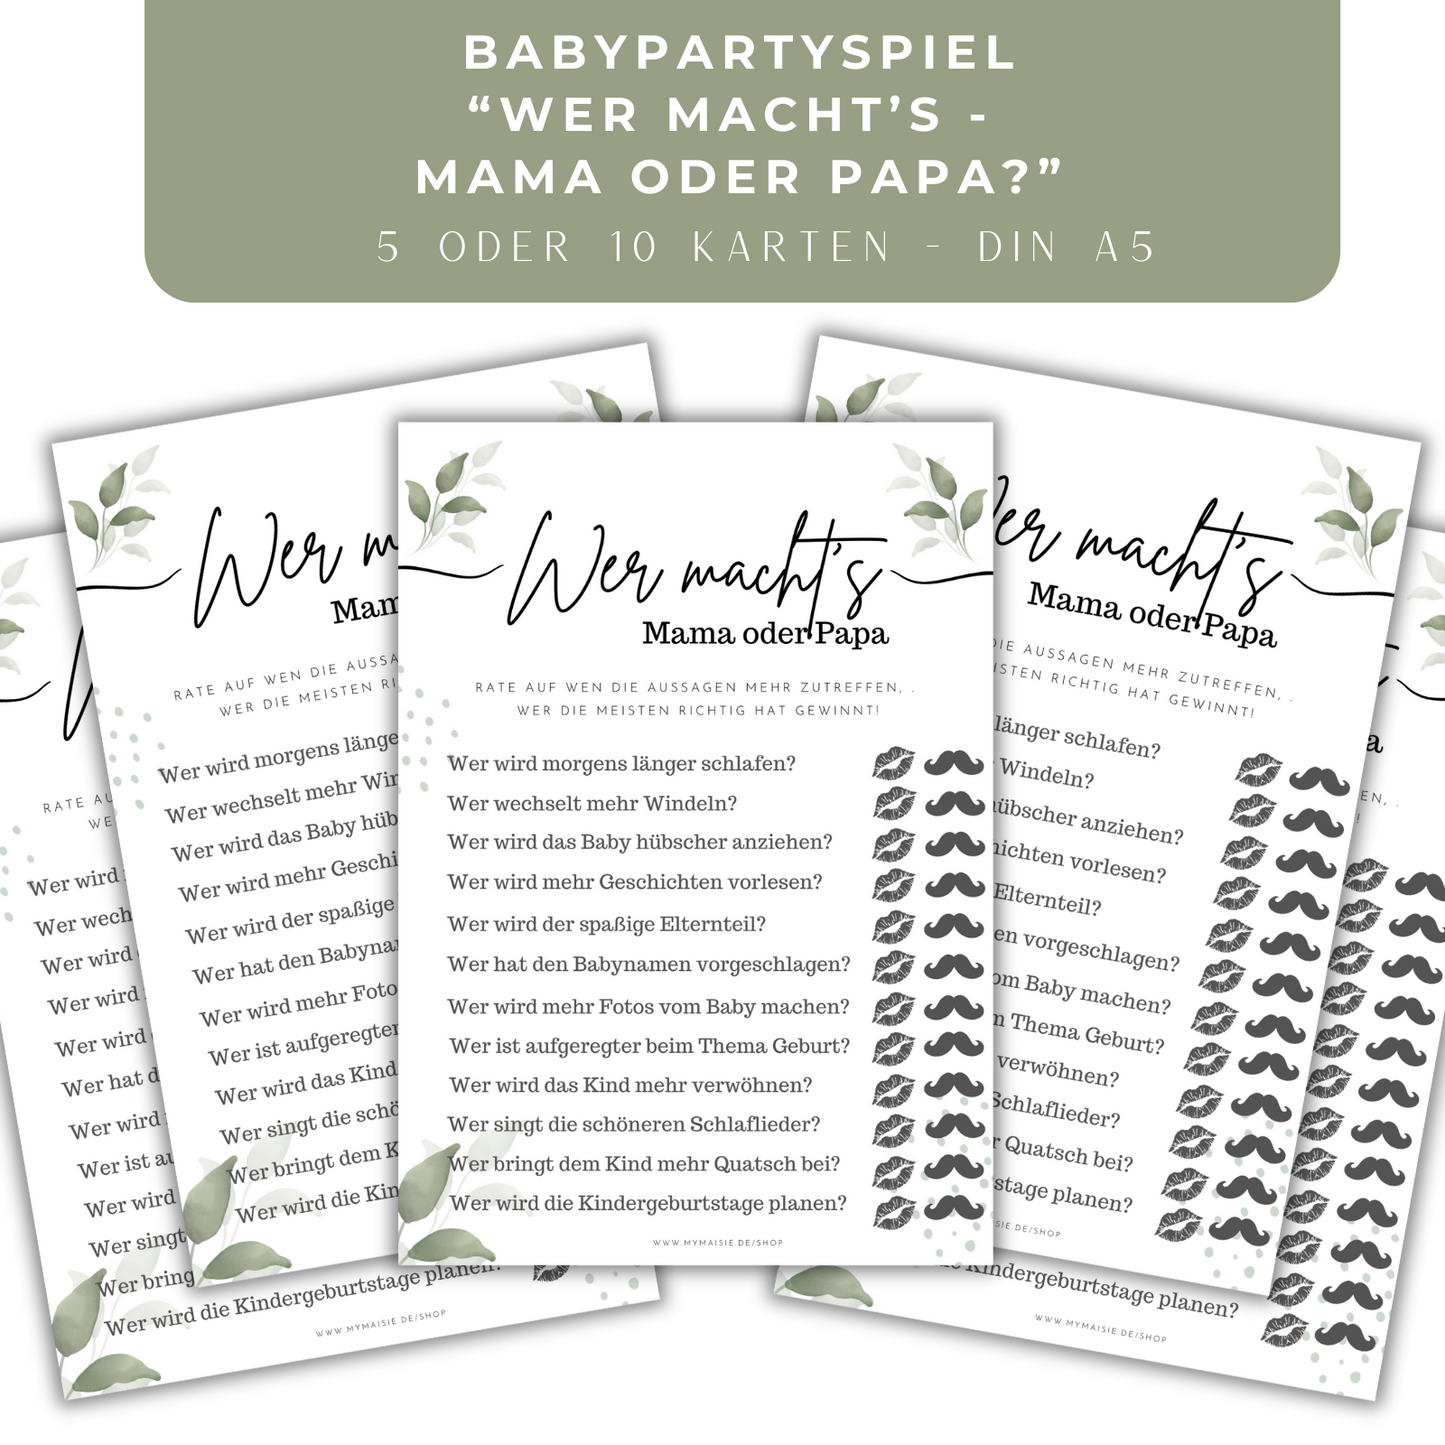 Babyparty Spiele Karten - Guess Who / Mama oder Papa  - 5 oder 10 Karten in DIN A5